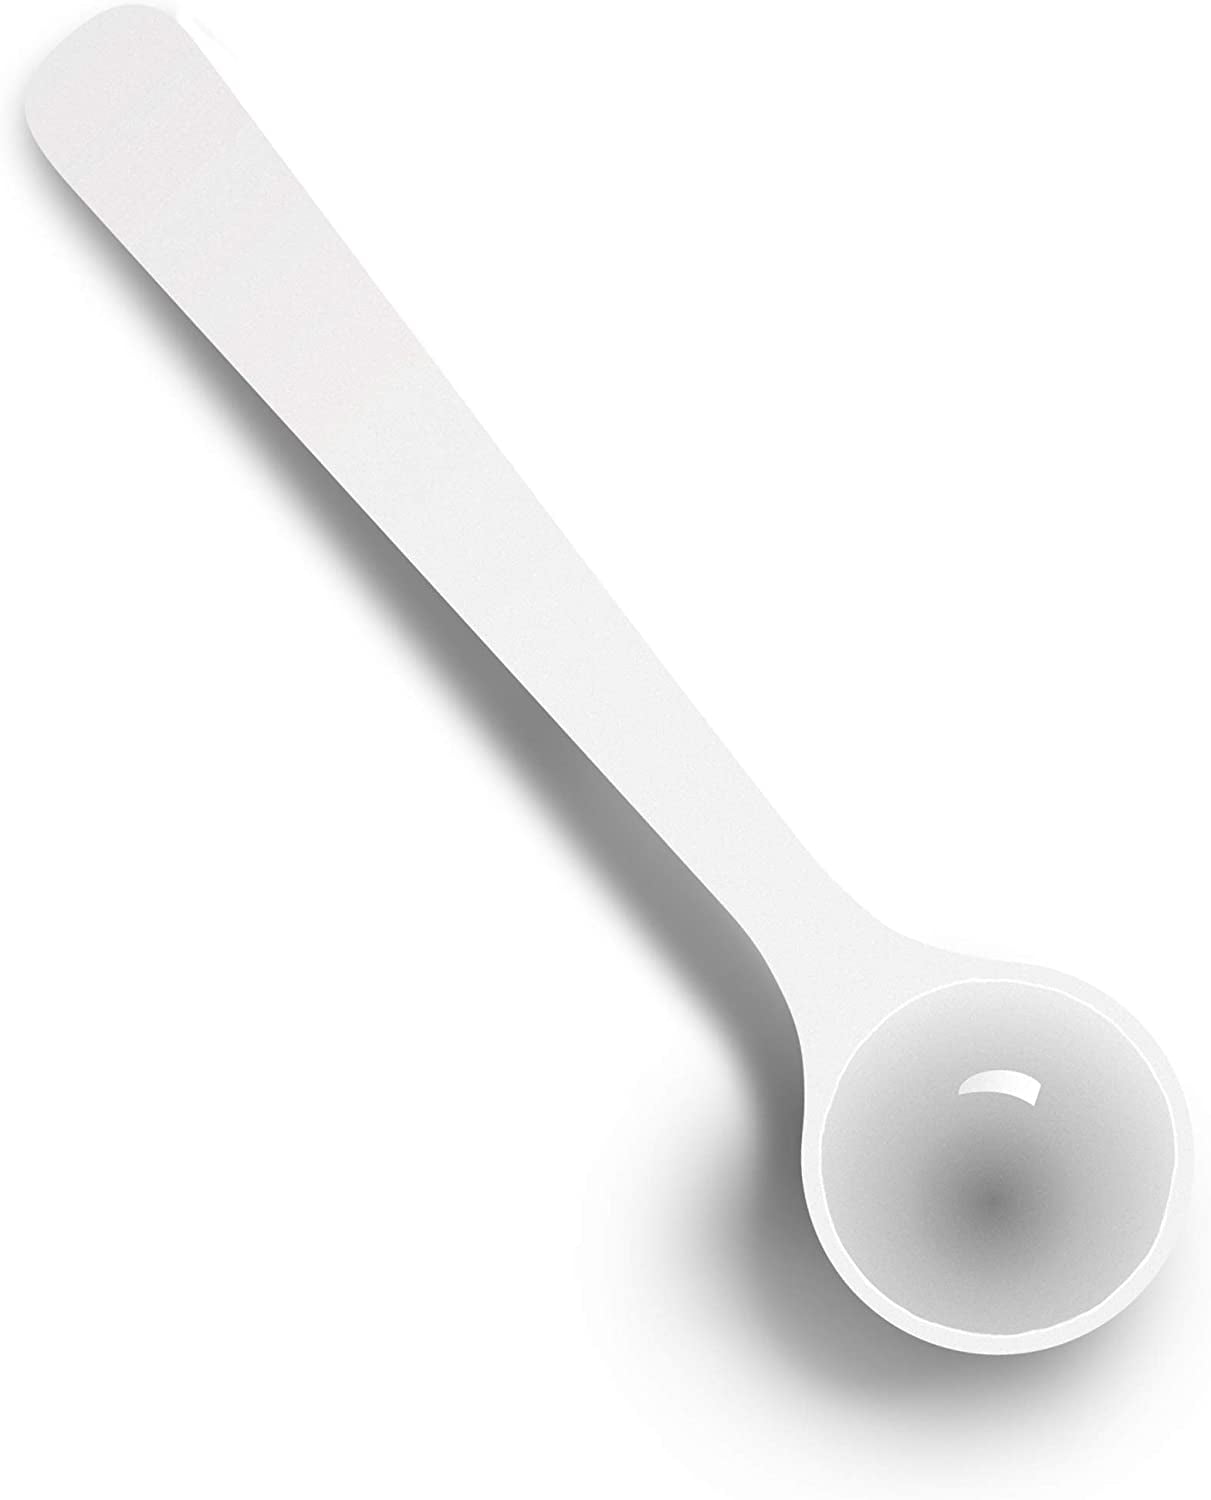 12 Pcs Stainless Steel Lab Scoops Micro Spoons Milligram Measuring Spoons